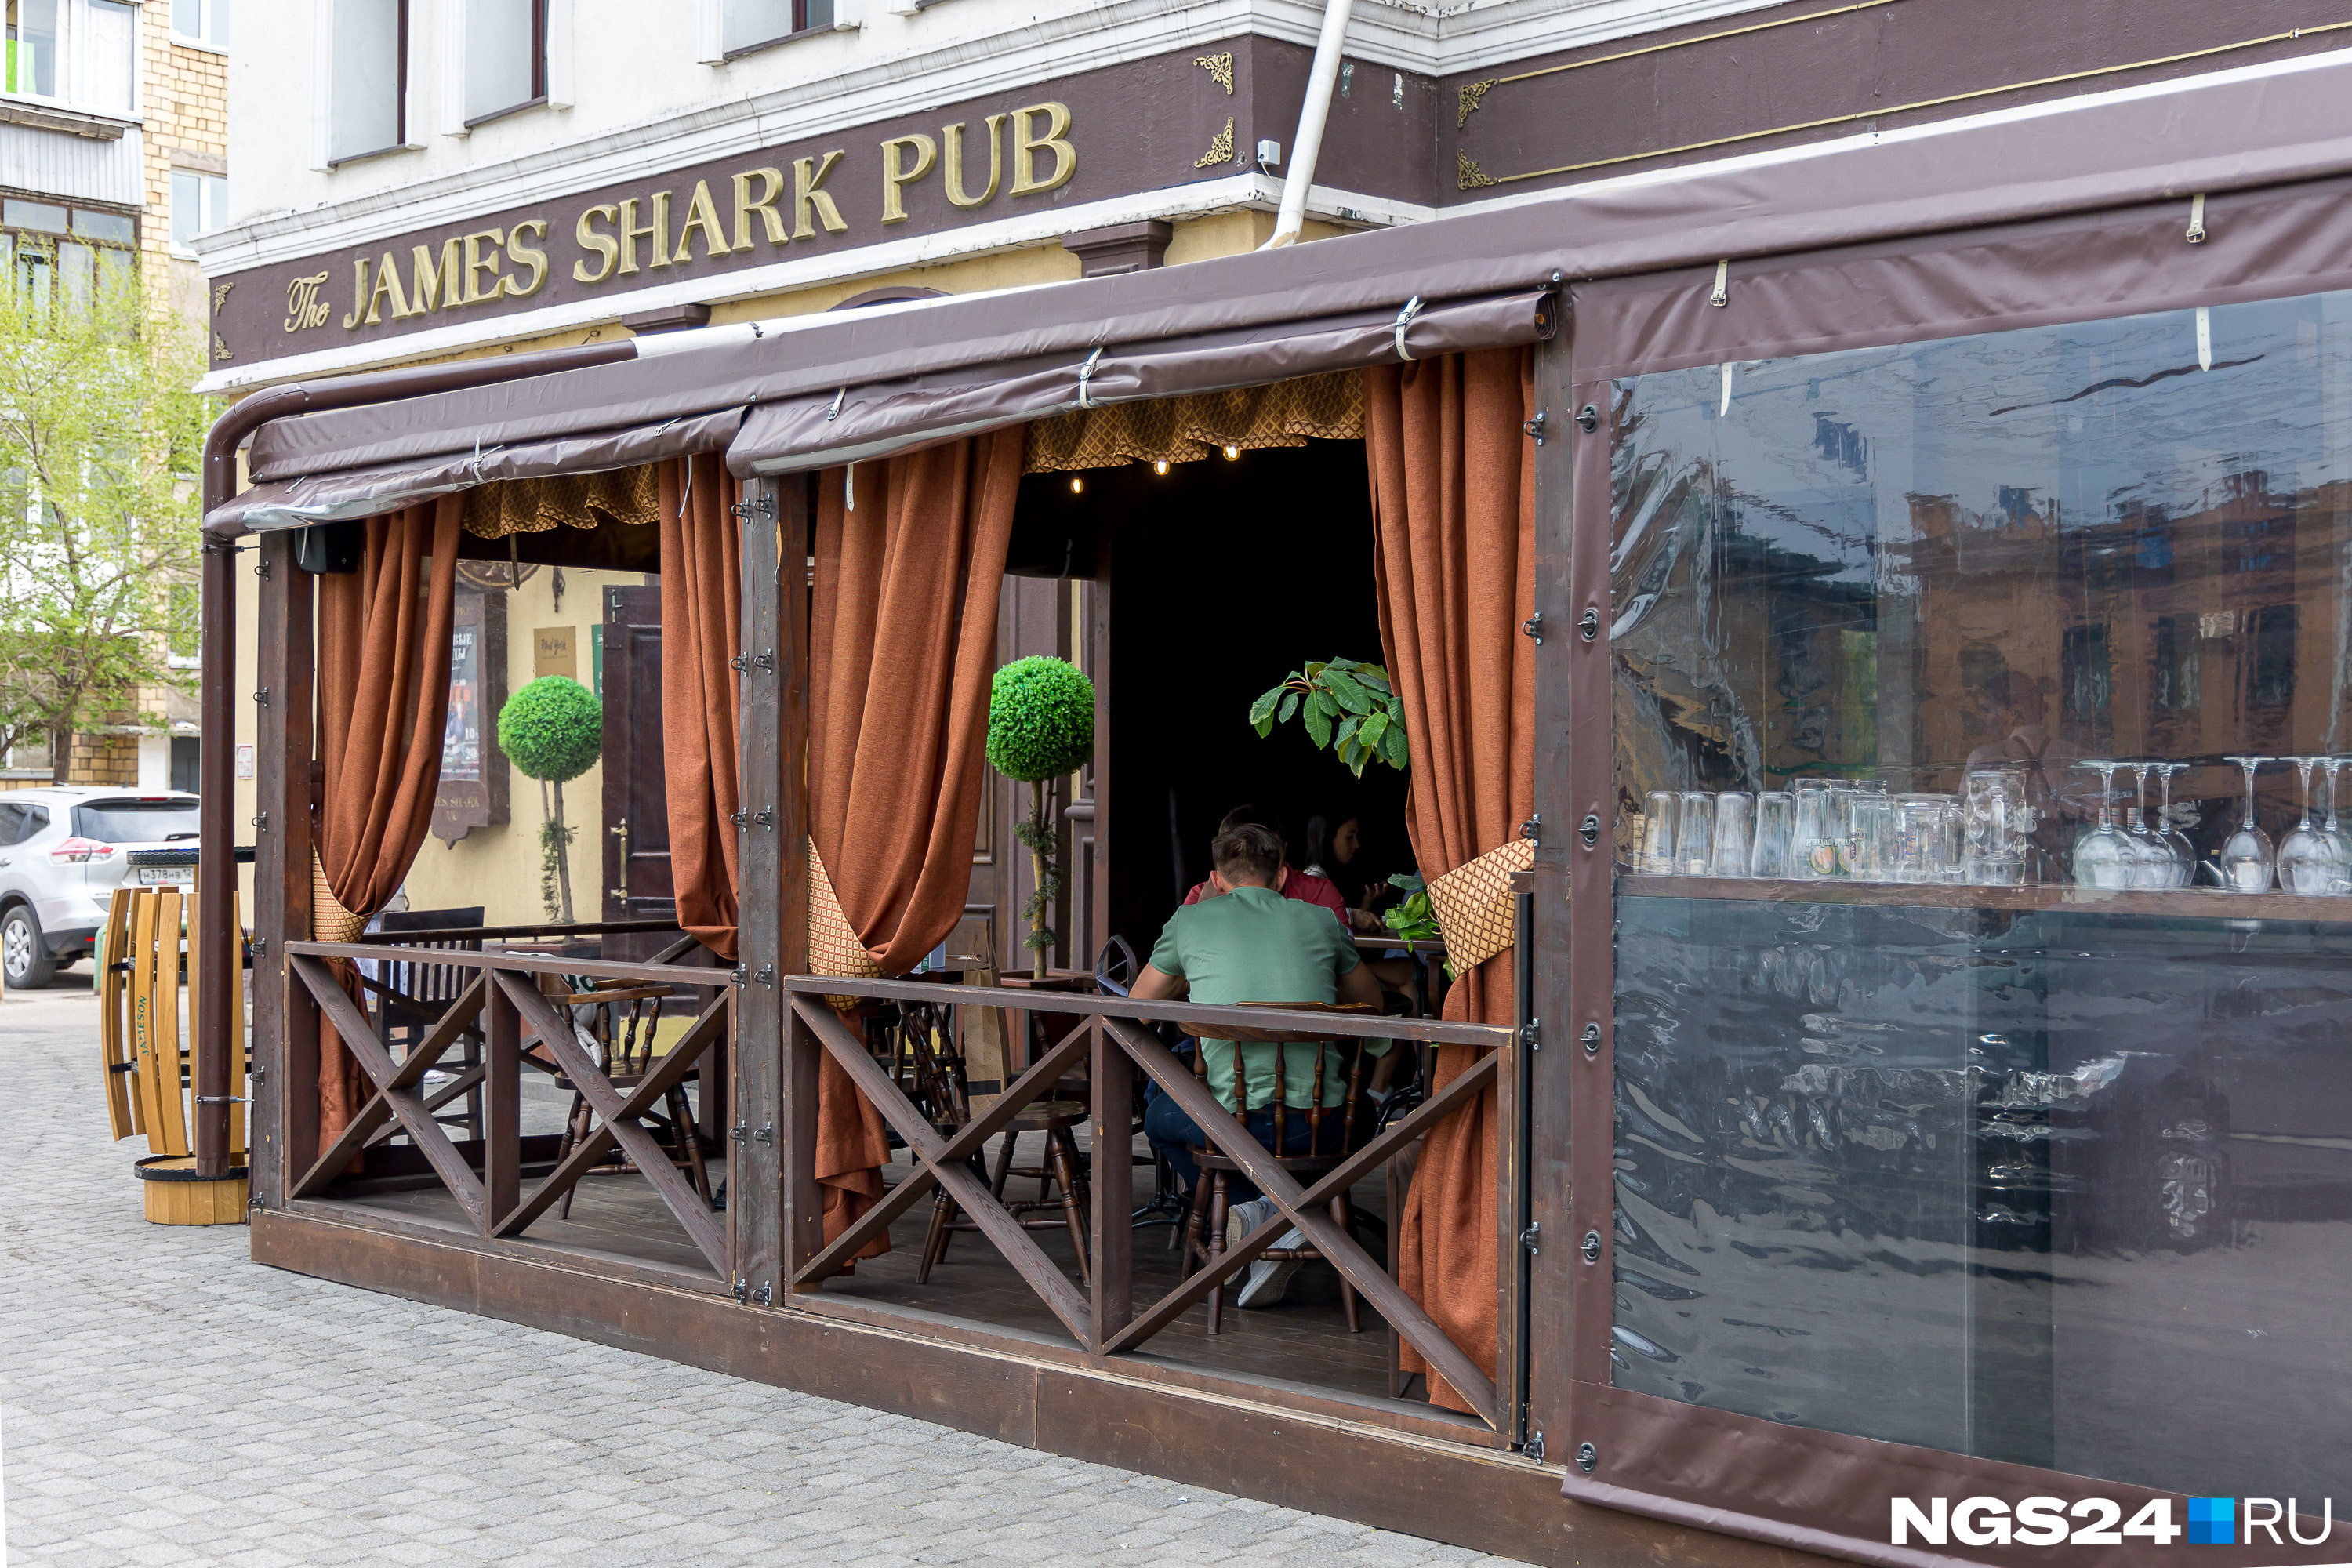 «Летка» The James Dhark Pub открылась одной из первых